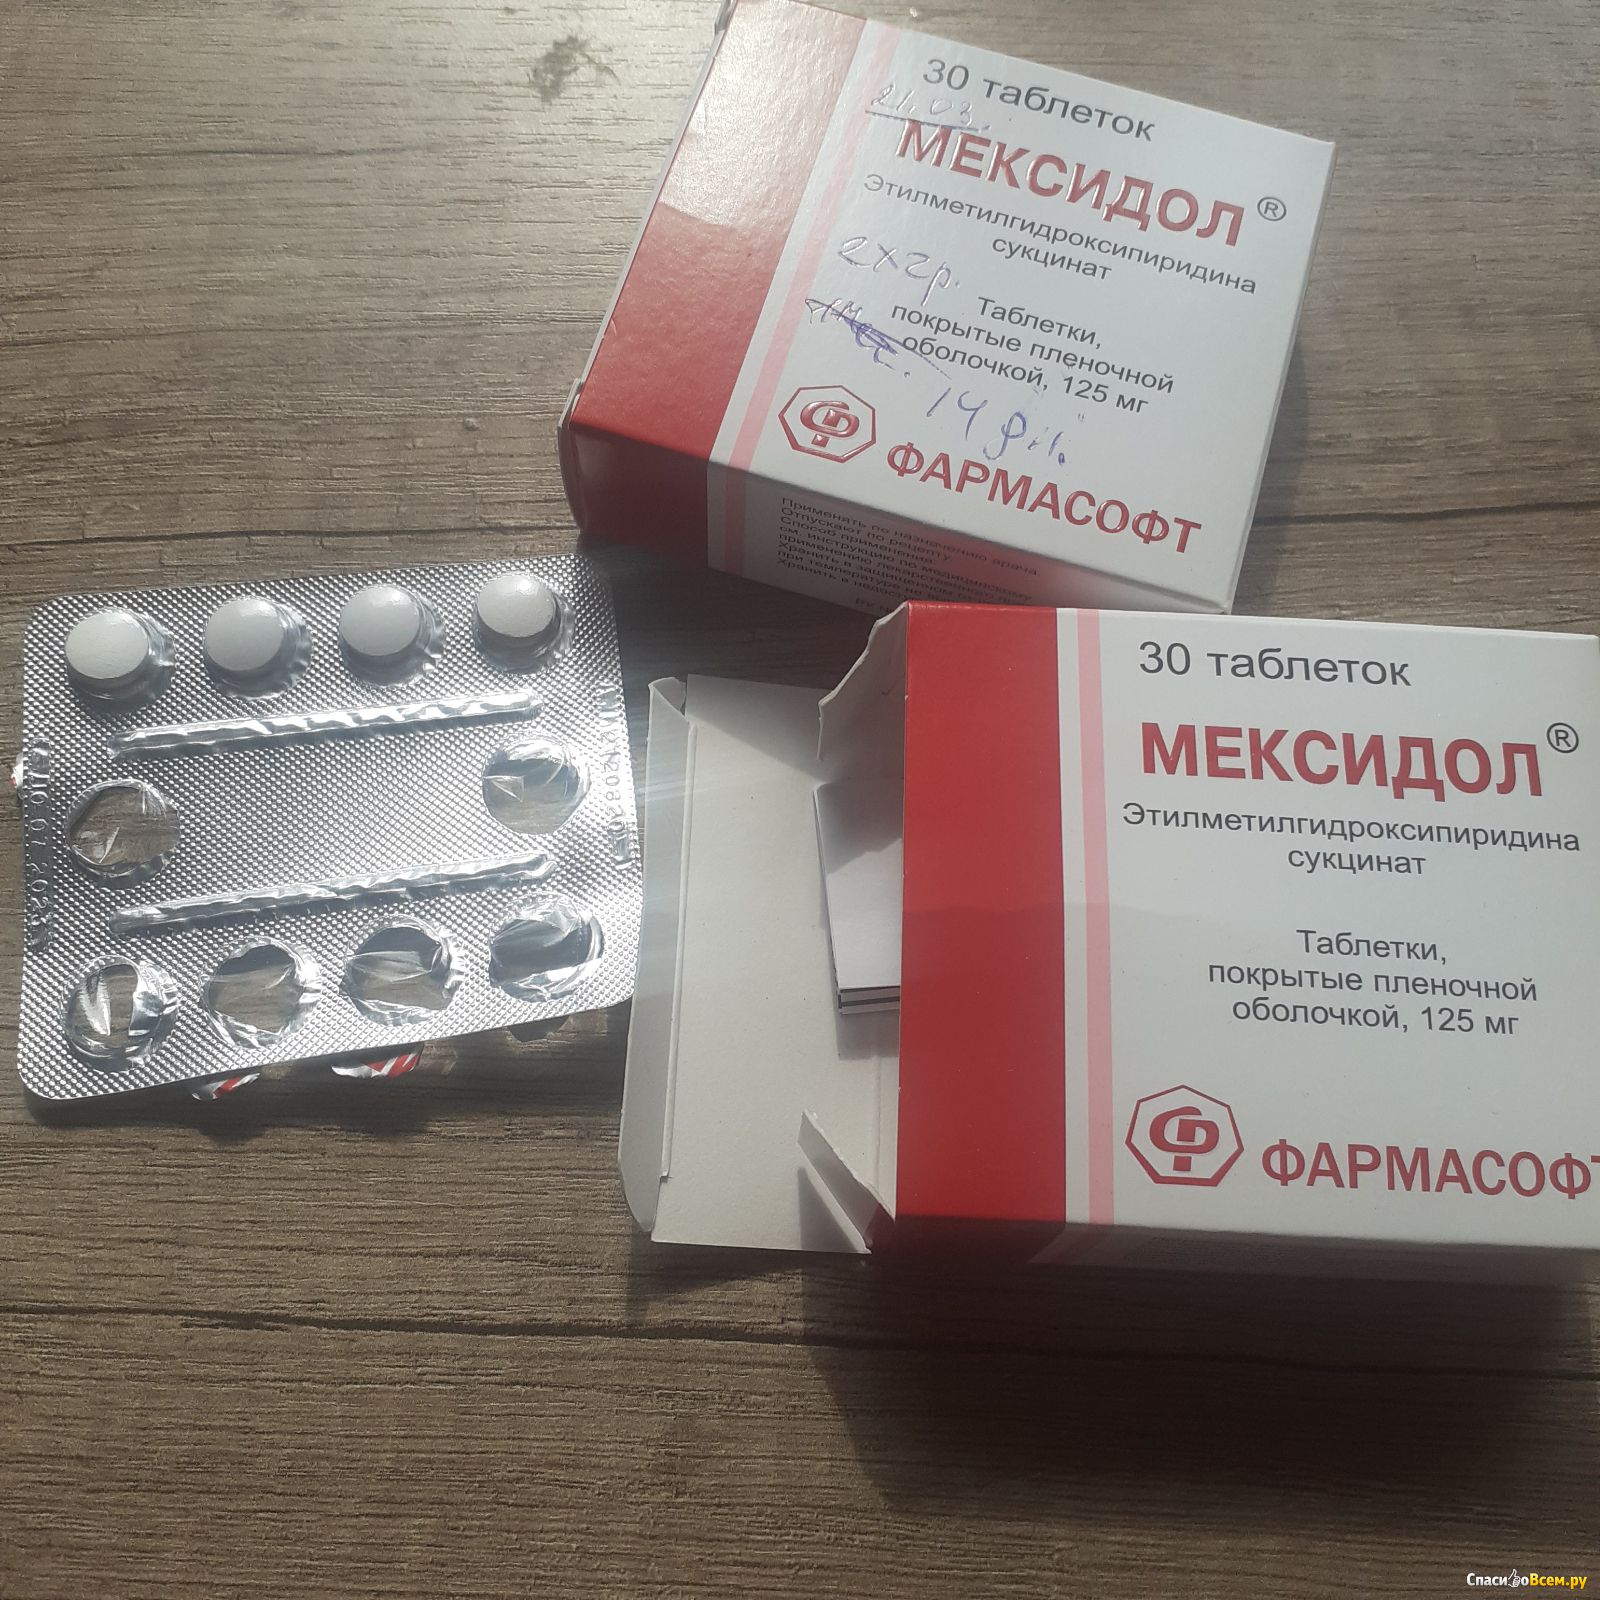 Мексидол 5 мг. Препарат для сосудов головного мозга Мексидол. Мексидол 150. Мексидол таблетки 125. Мексидол упаковка таблетки.